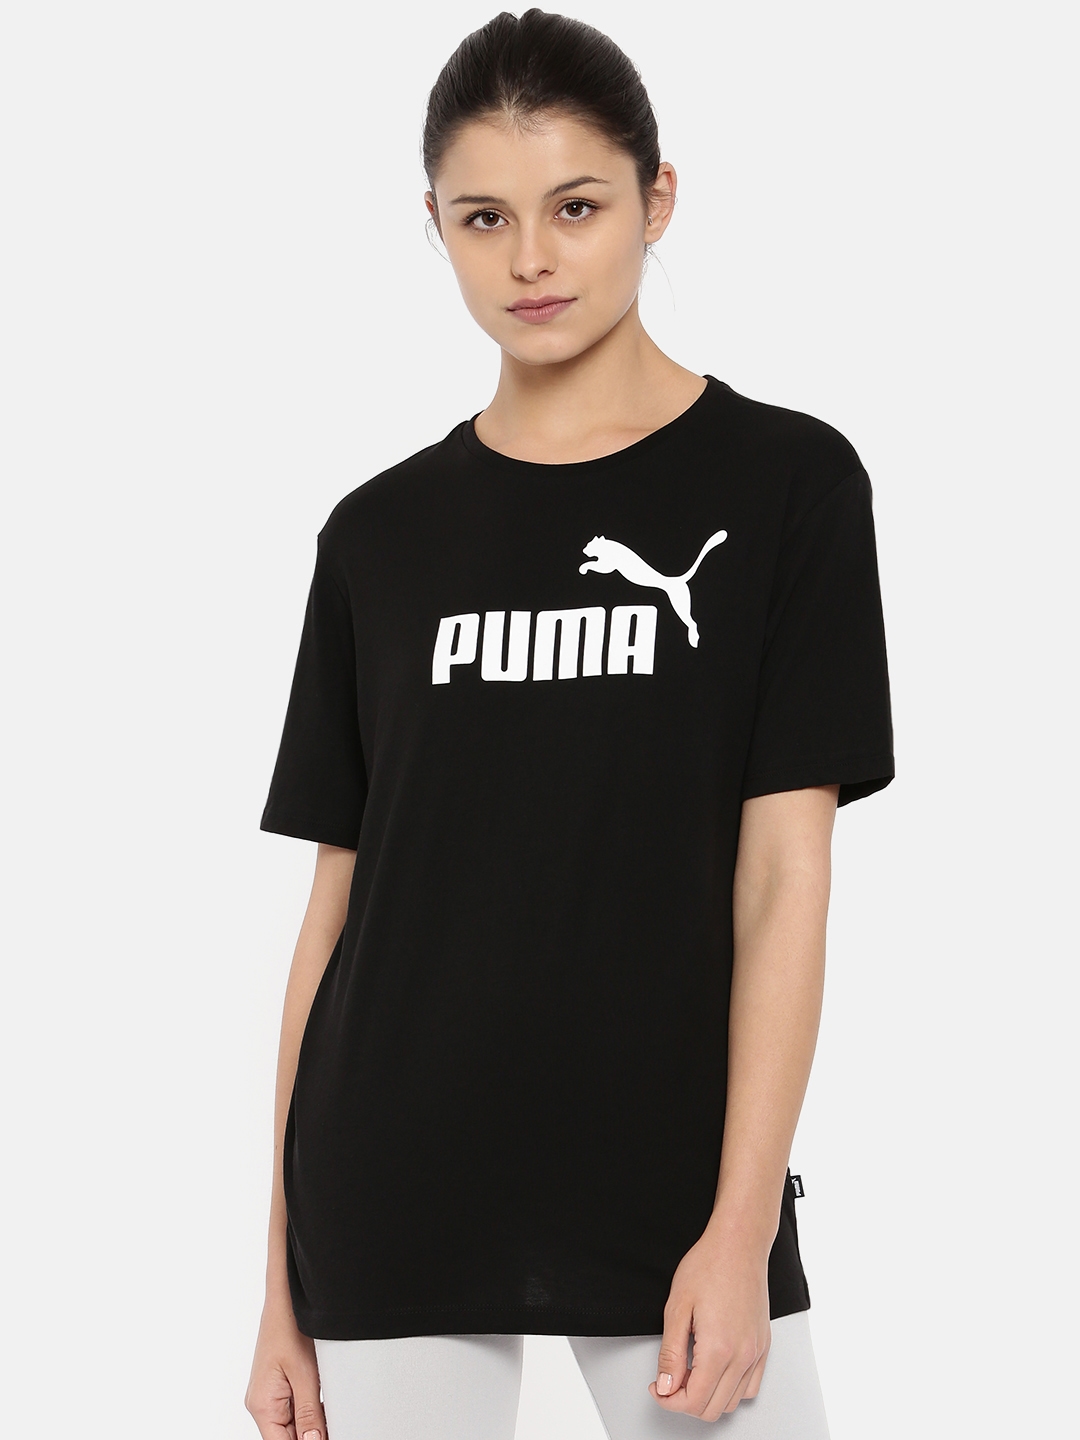 puma women's activewear